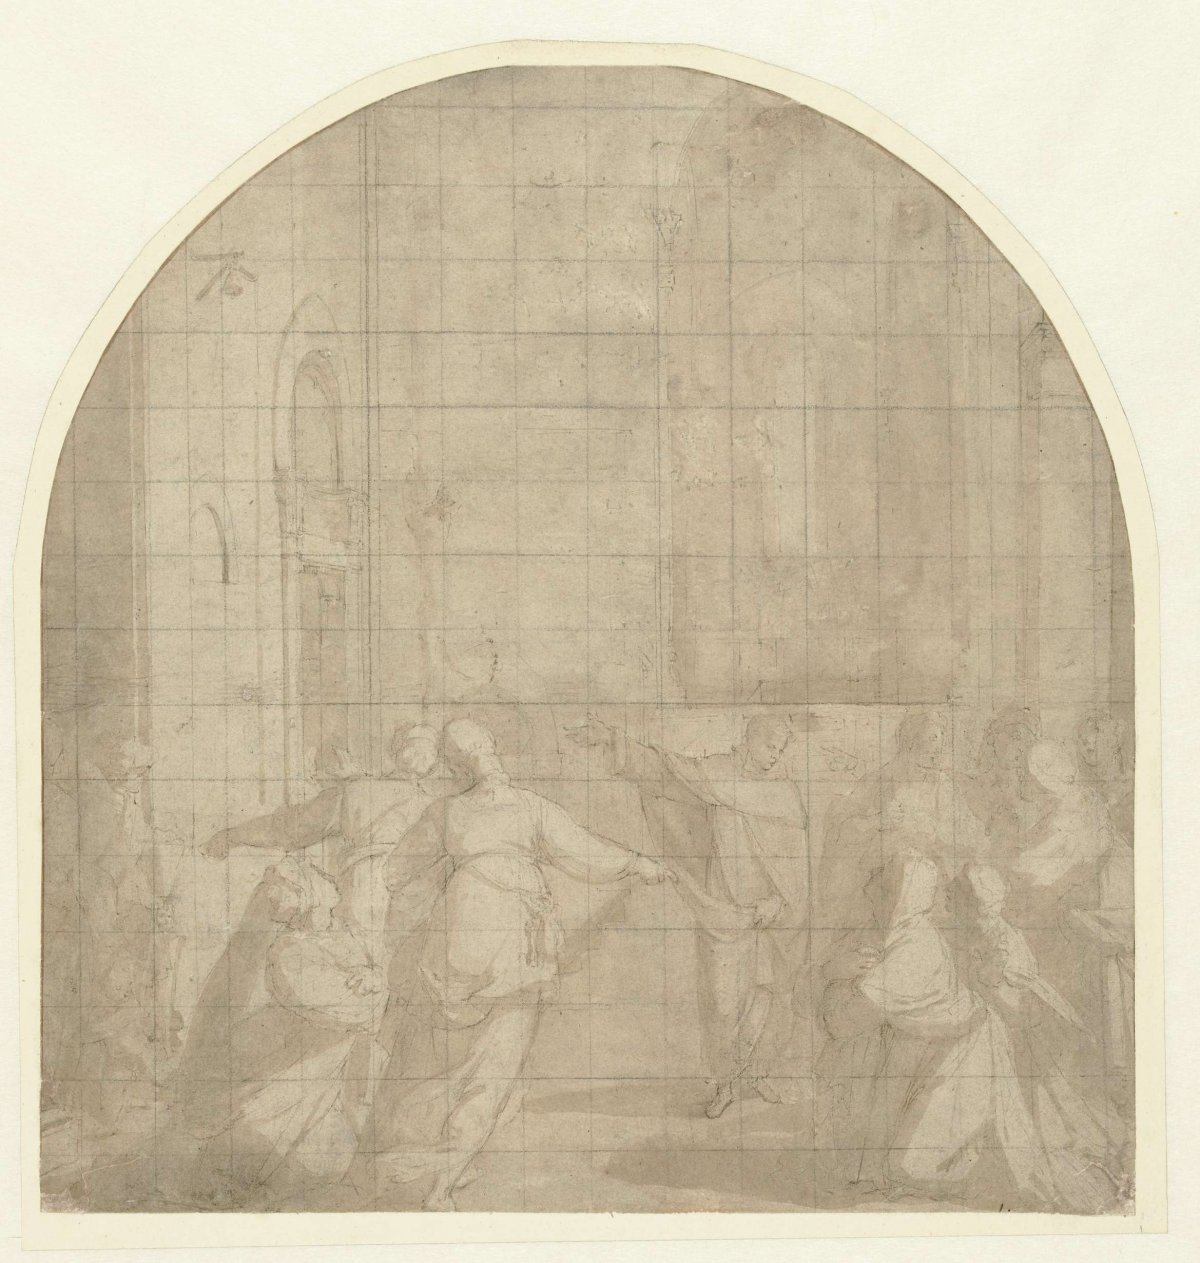 Saint Dominic and the heretic women, Bernardino Poccetti, 1580 - 1585